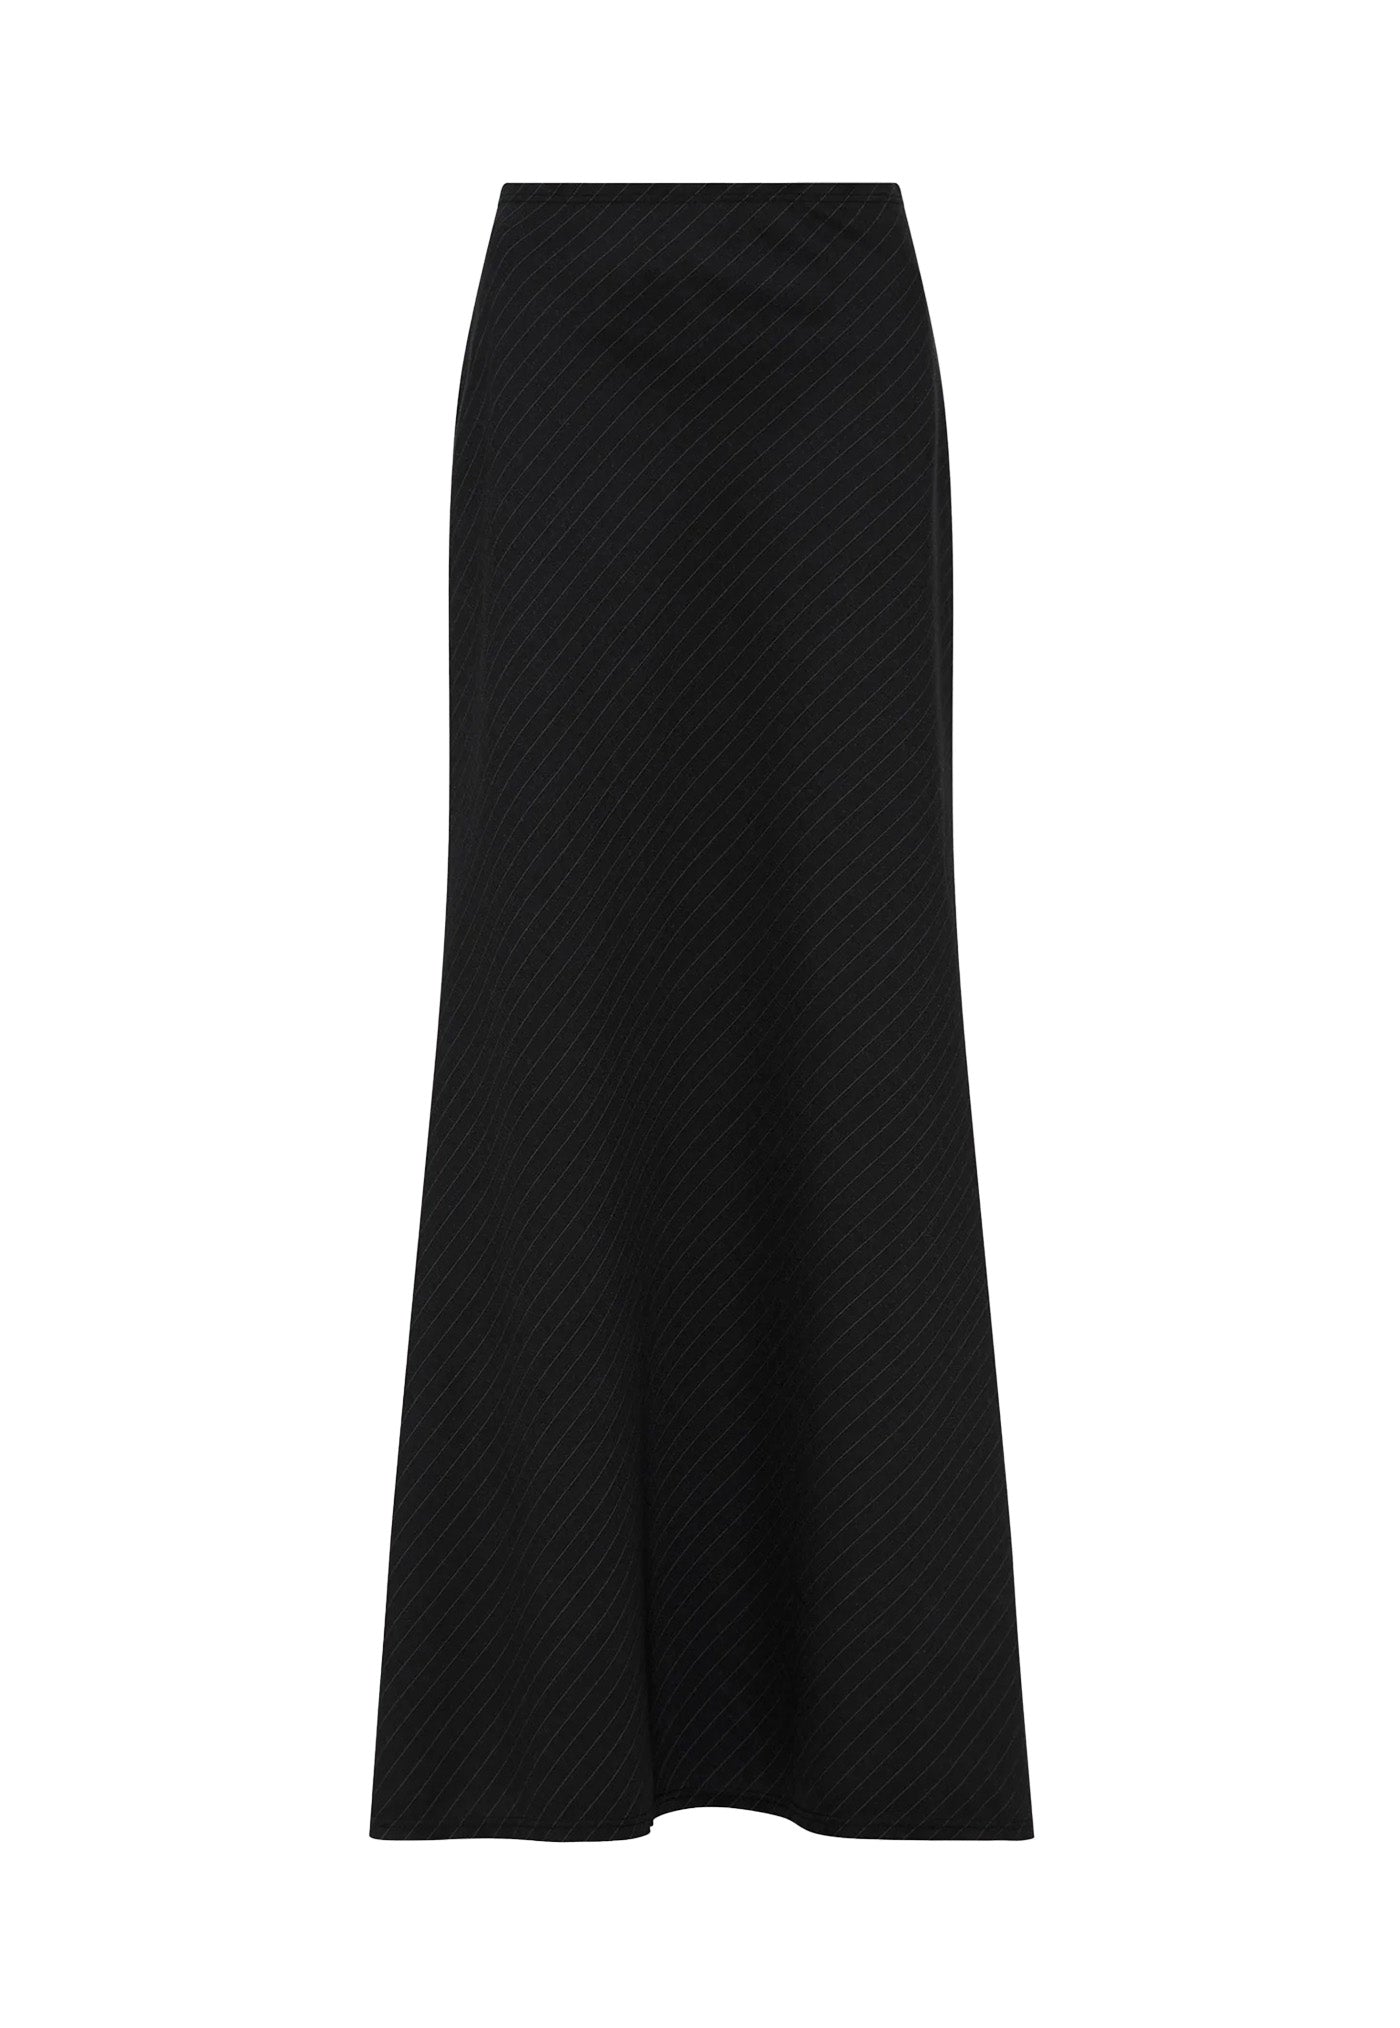 Pinstripe Maxi Skirt - Black sold by Angel Divine